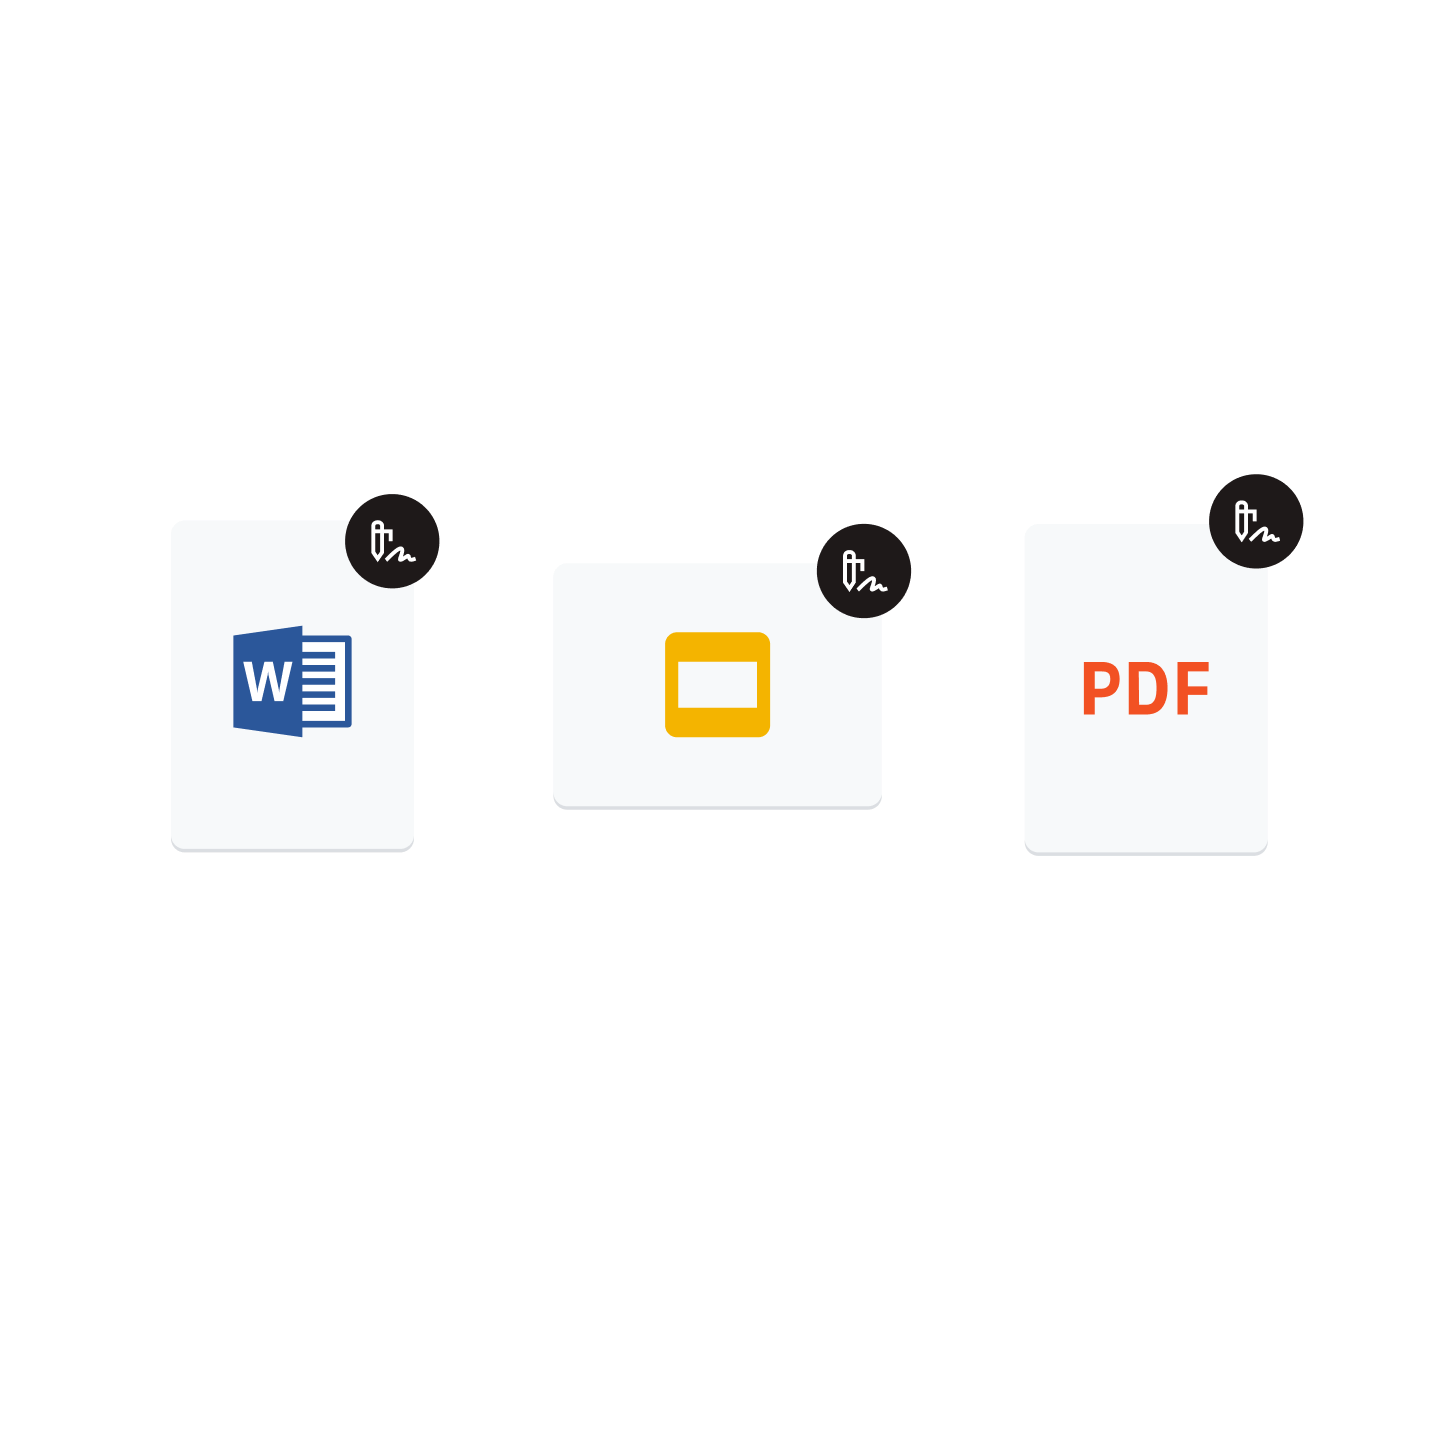 A Microsoft Word icon, a Google Slides icon, and a PDF icon